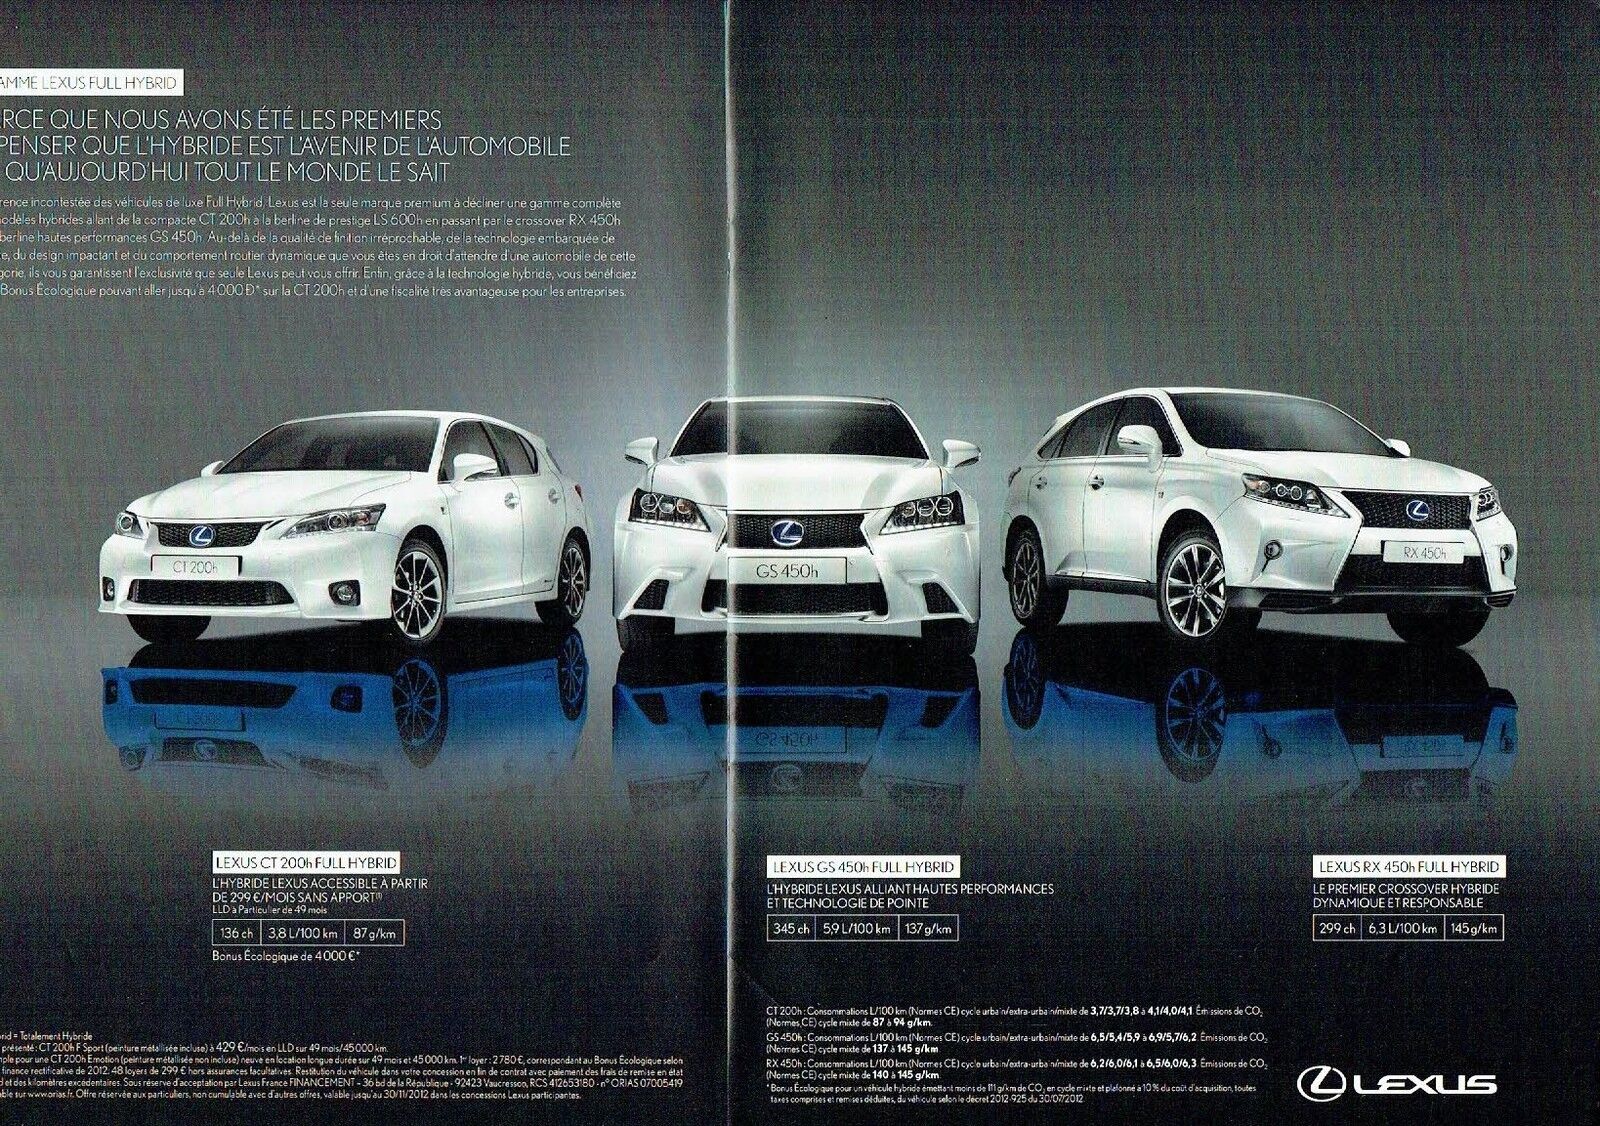 2012 Lexus Full Hybrid CT 200h GS450h (2d) ADVERTISING ADVERTISEMENT 106